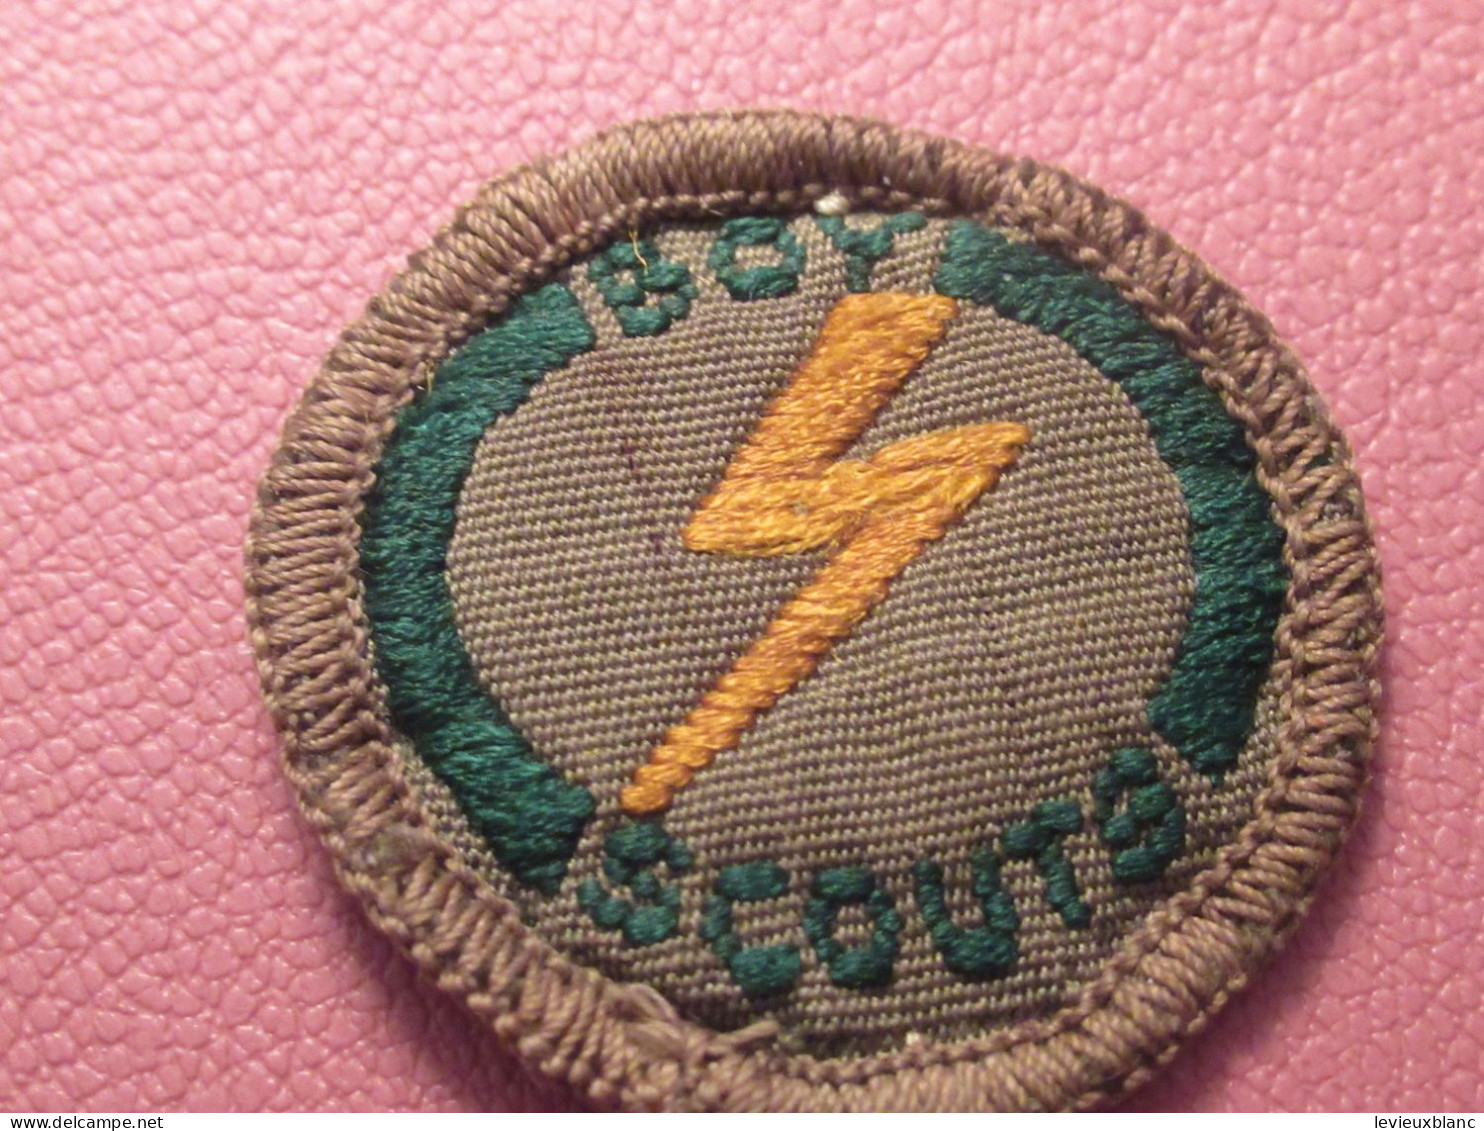 Scoutisme Canada/ Ecusson  Tissu/ Insigne De Mérite/Eclair /année 1940-1960                  ET593 - Padvinderij